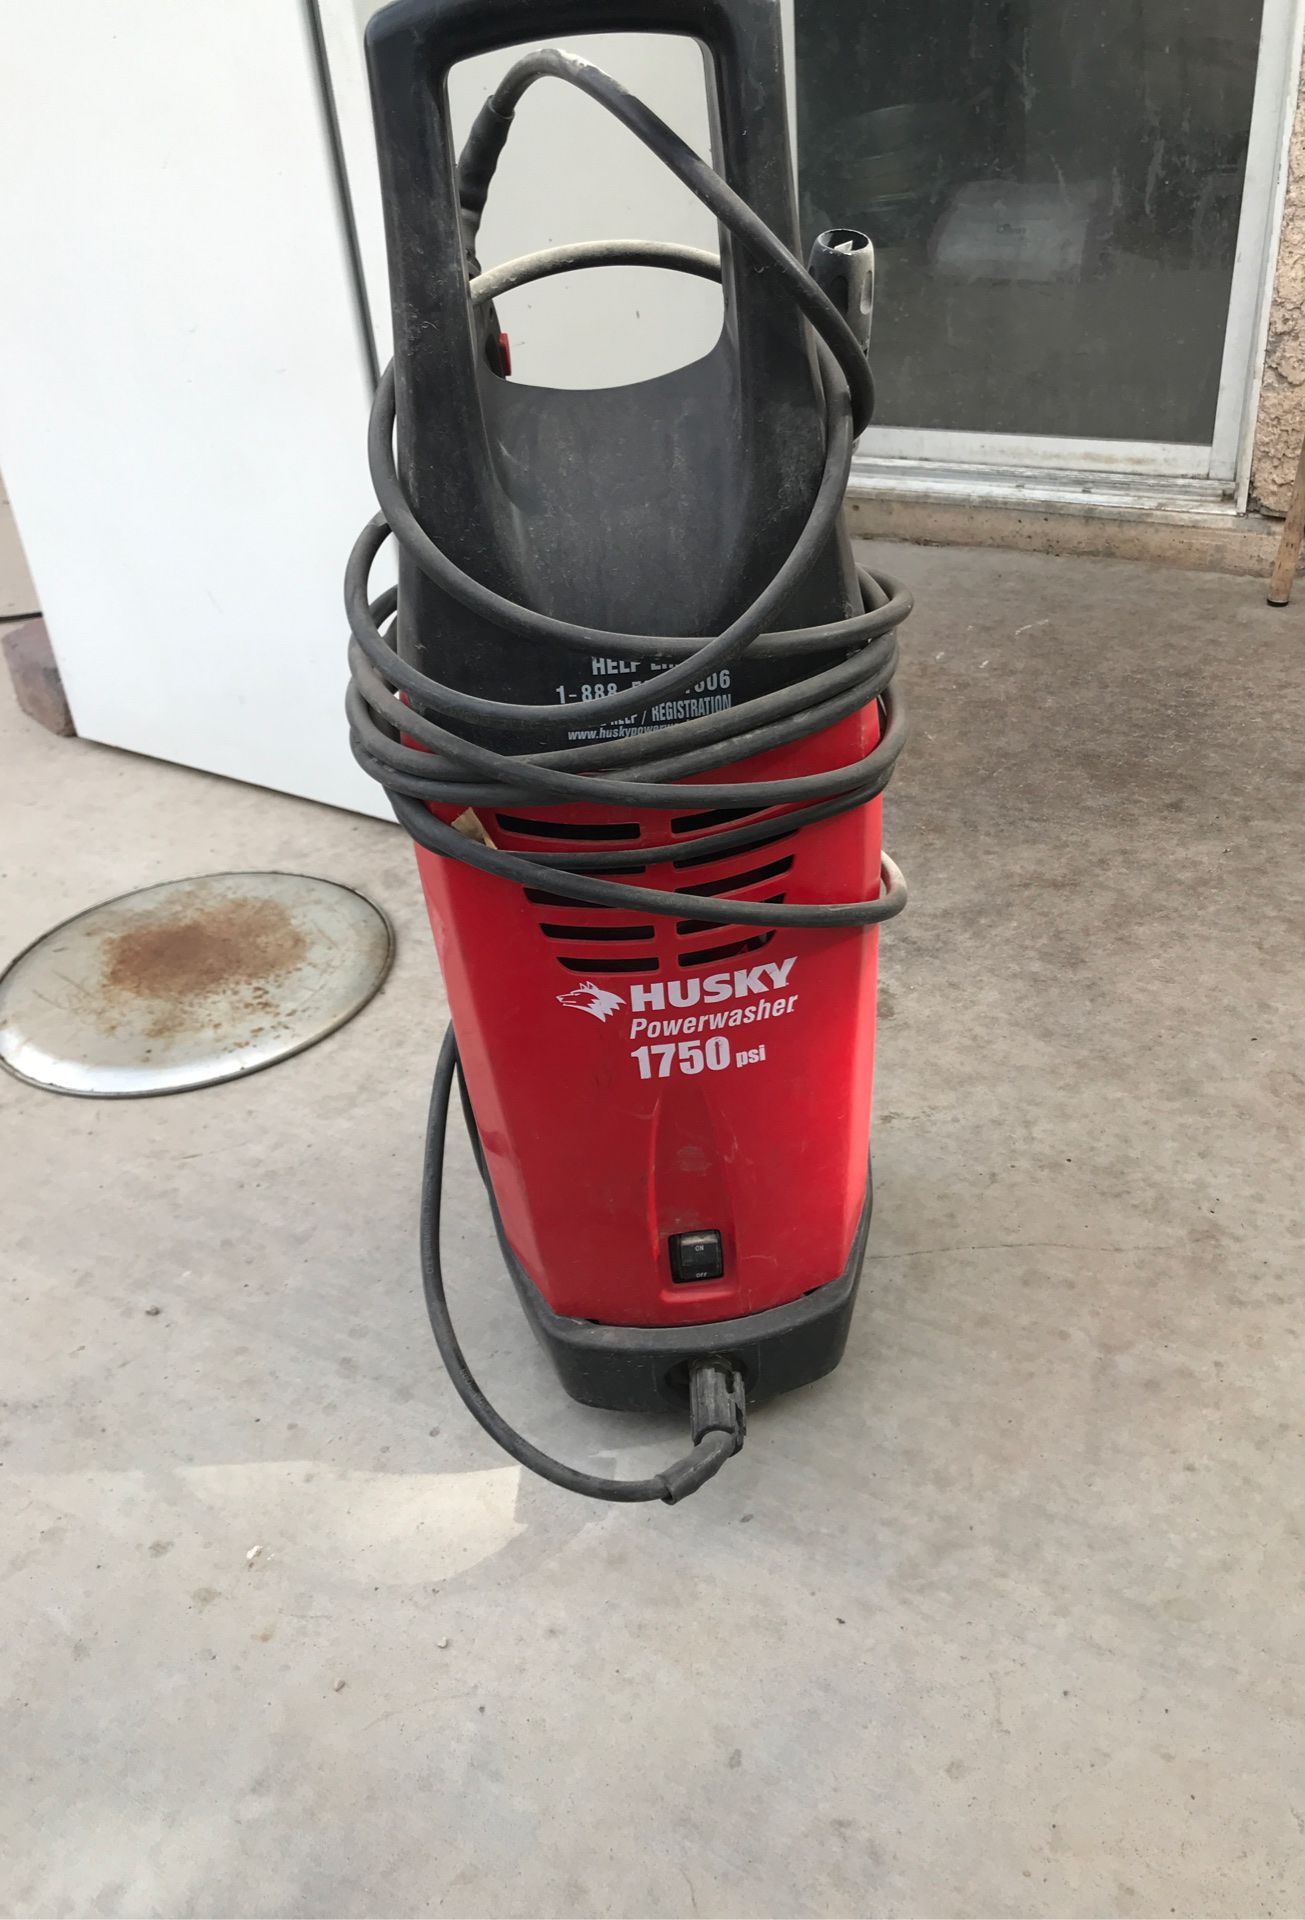 Husky power washer 1750 psi